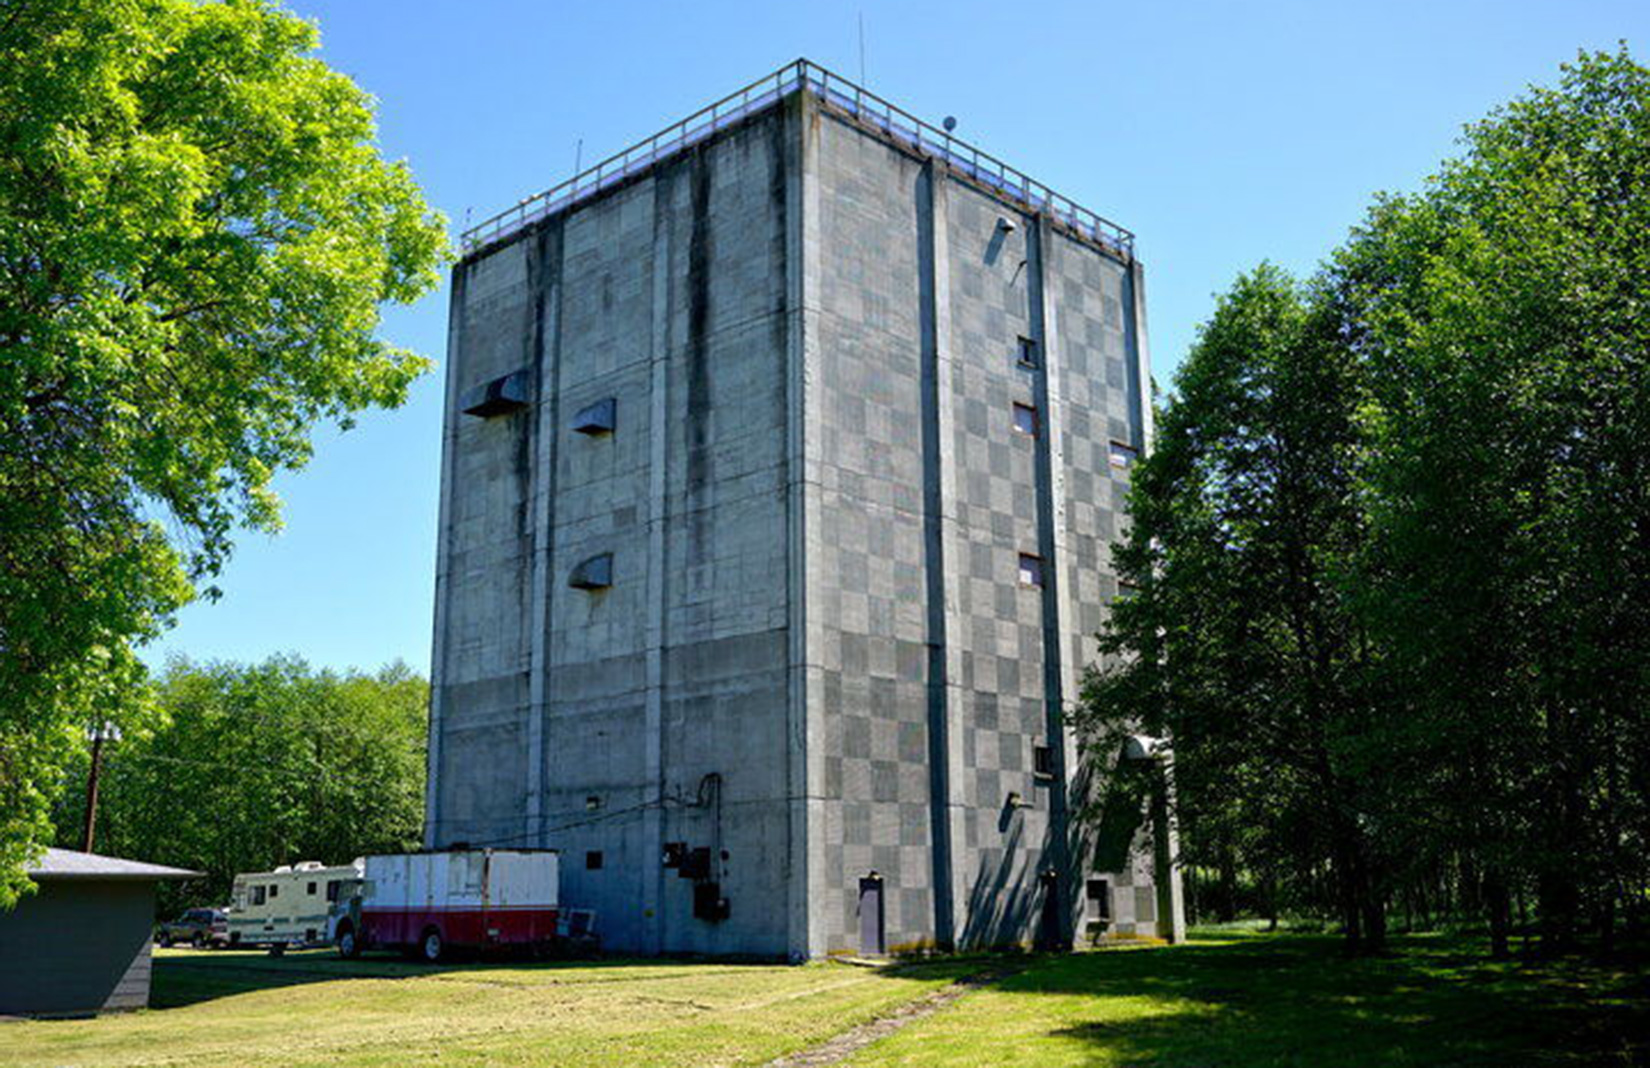 Radar Tower in Blaine